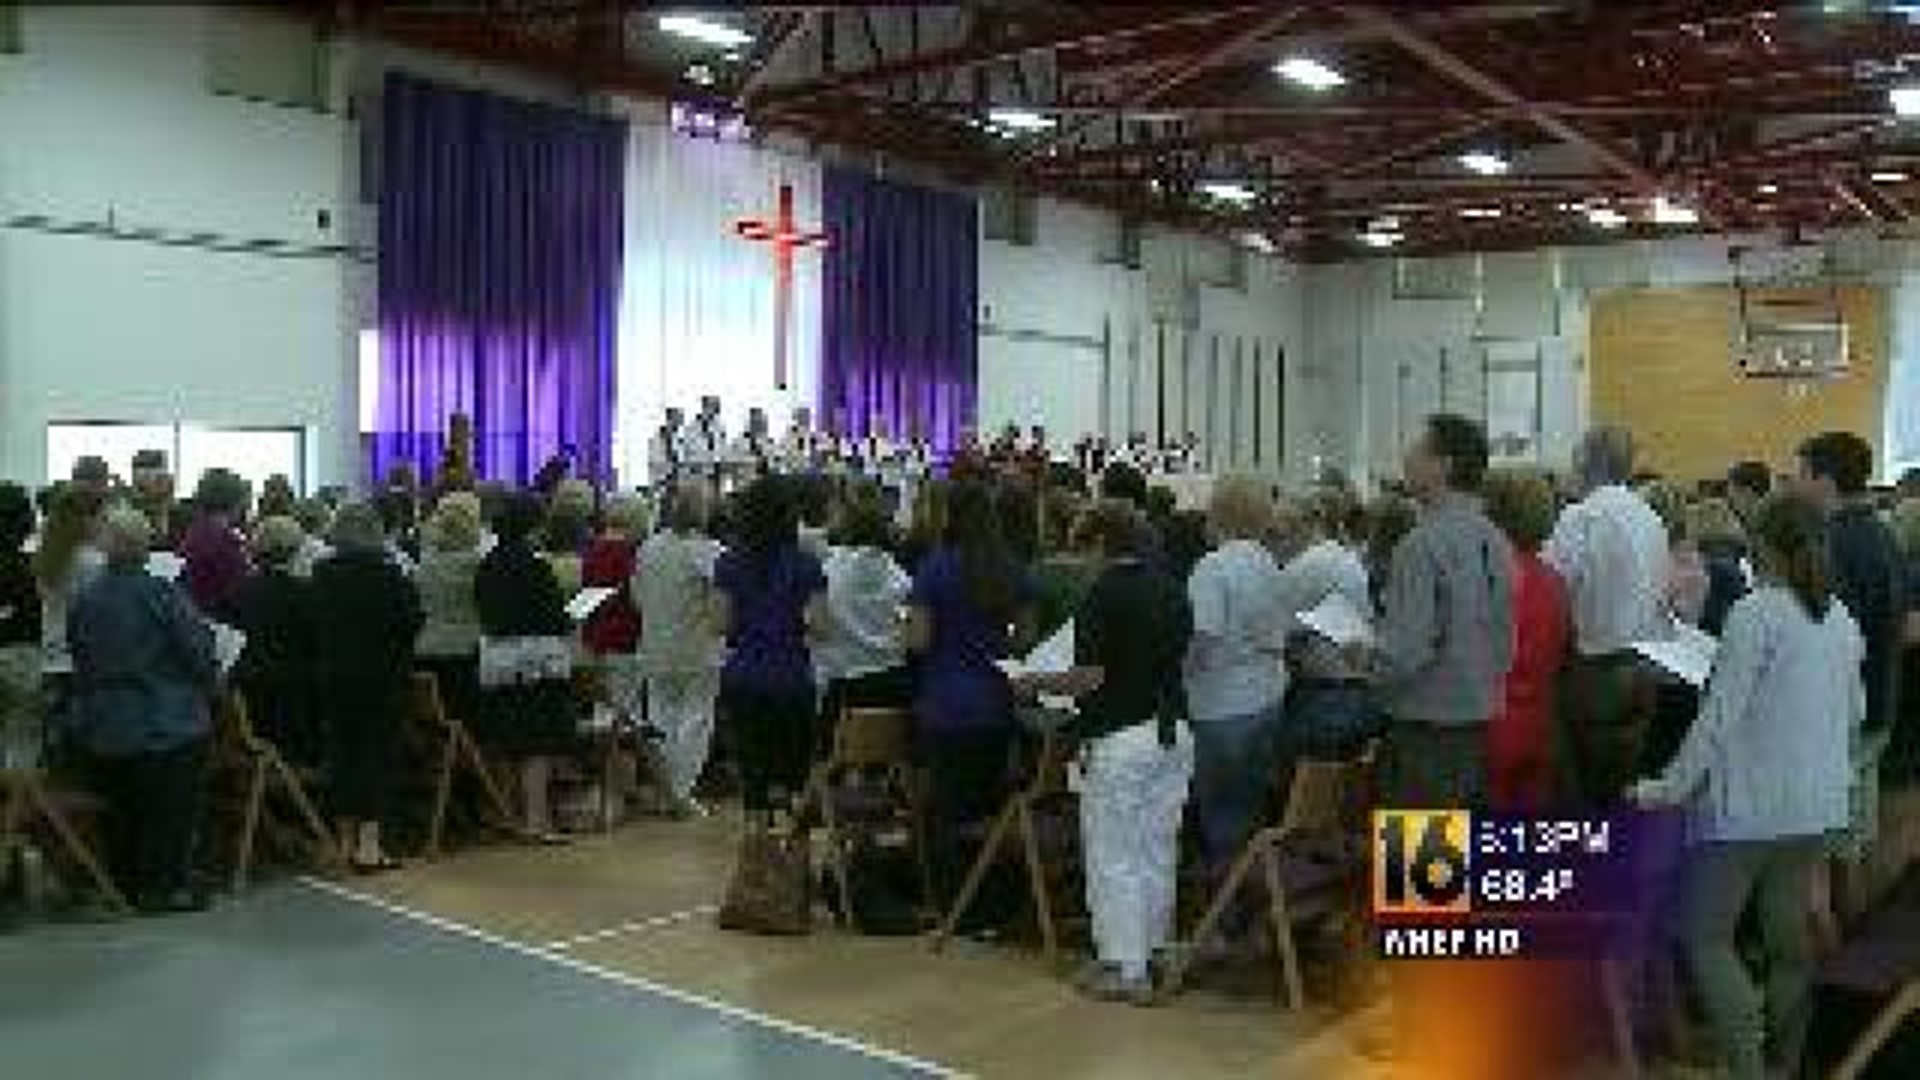 U of S Marks Anniversary At Opening Mass